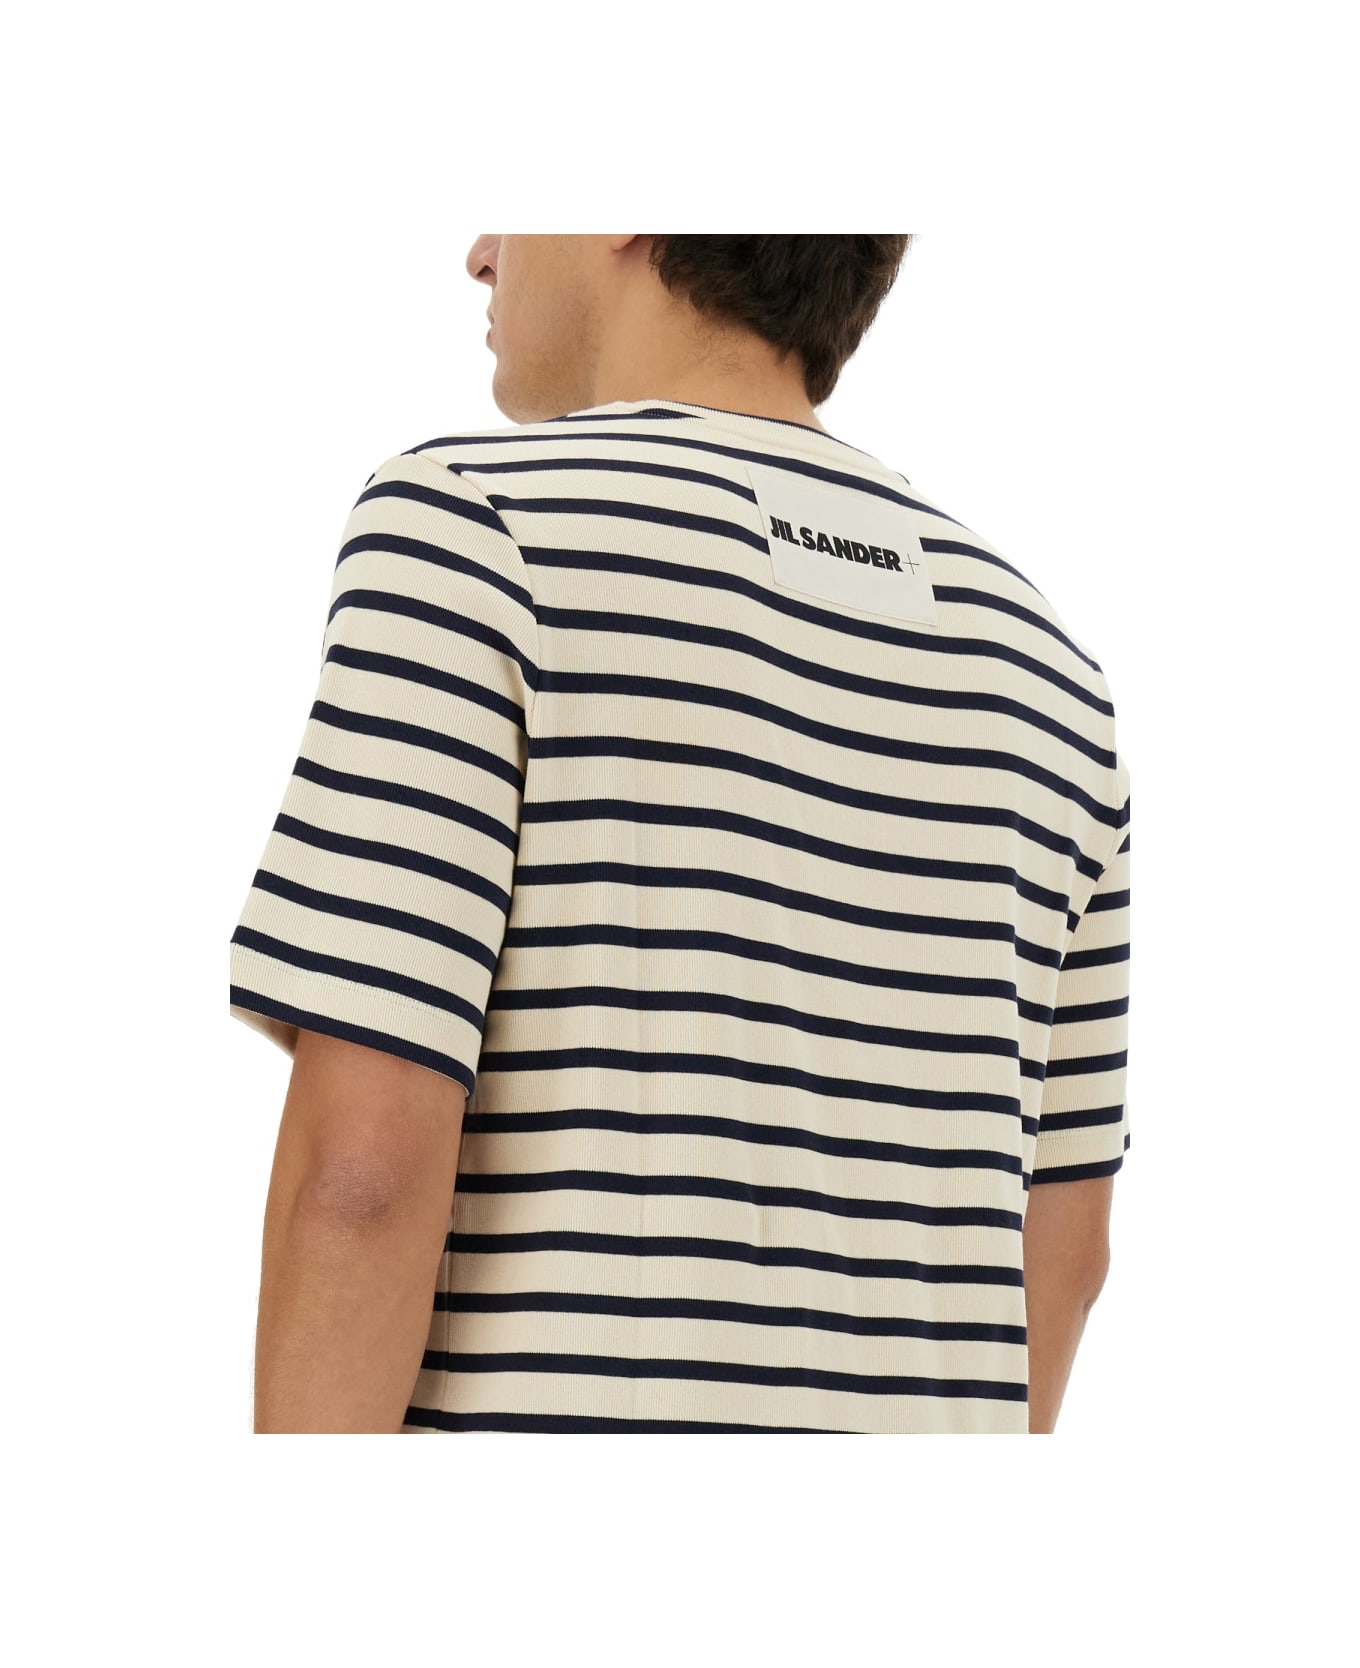 Jil Sander Striped T-shirt - Bianco Nero シャツ